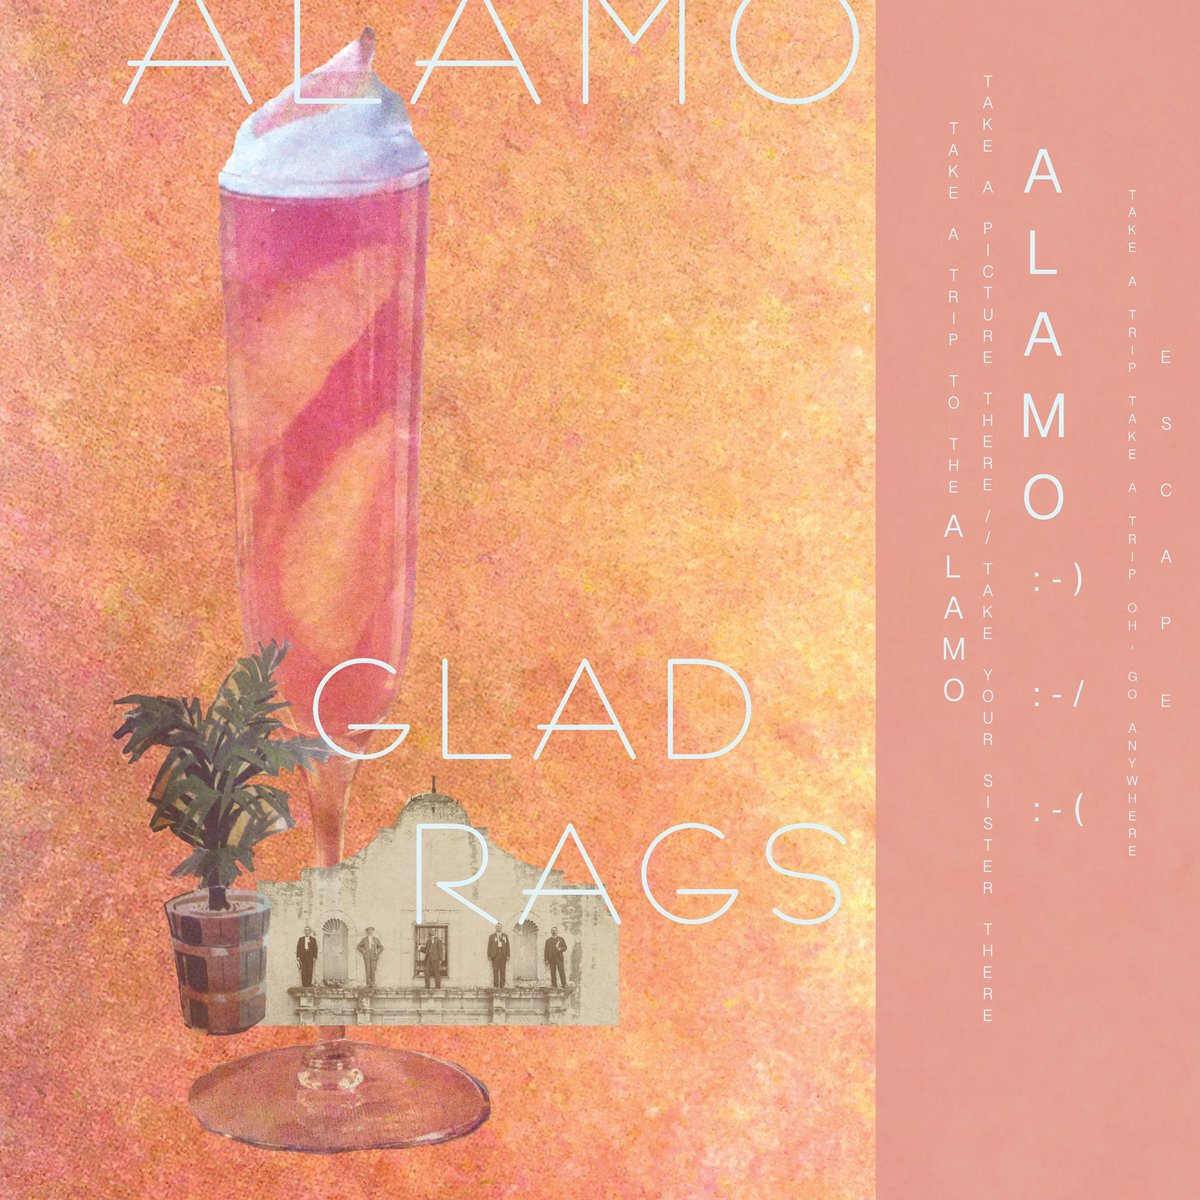 Alamo by Glad Rags